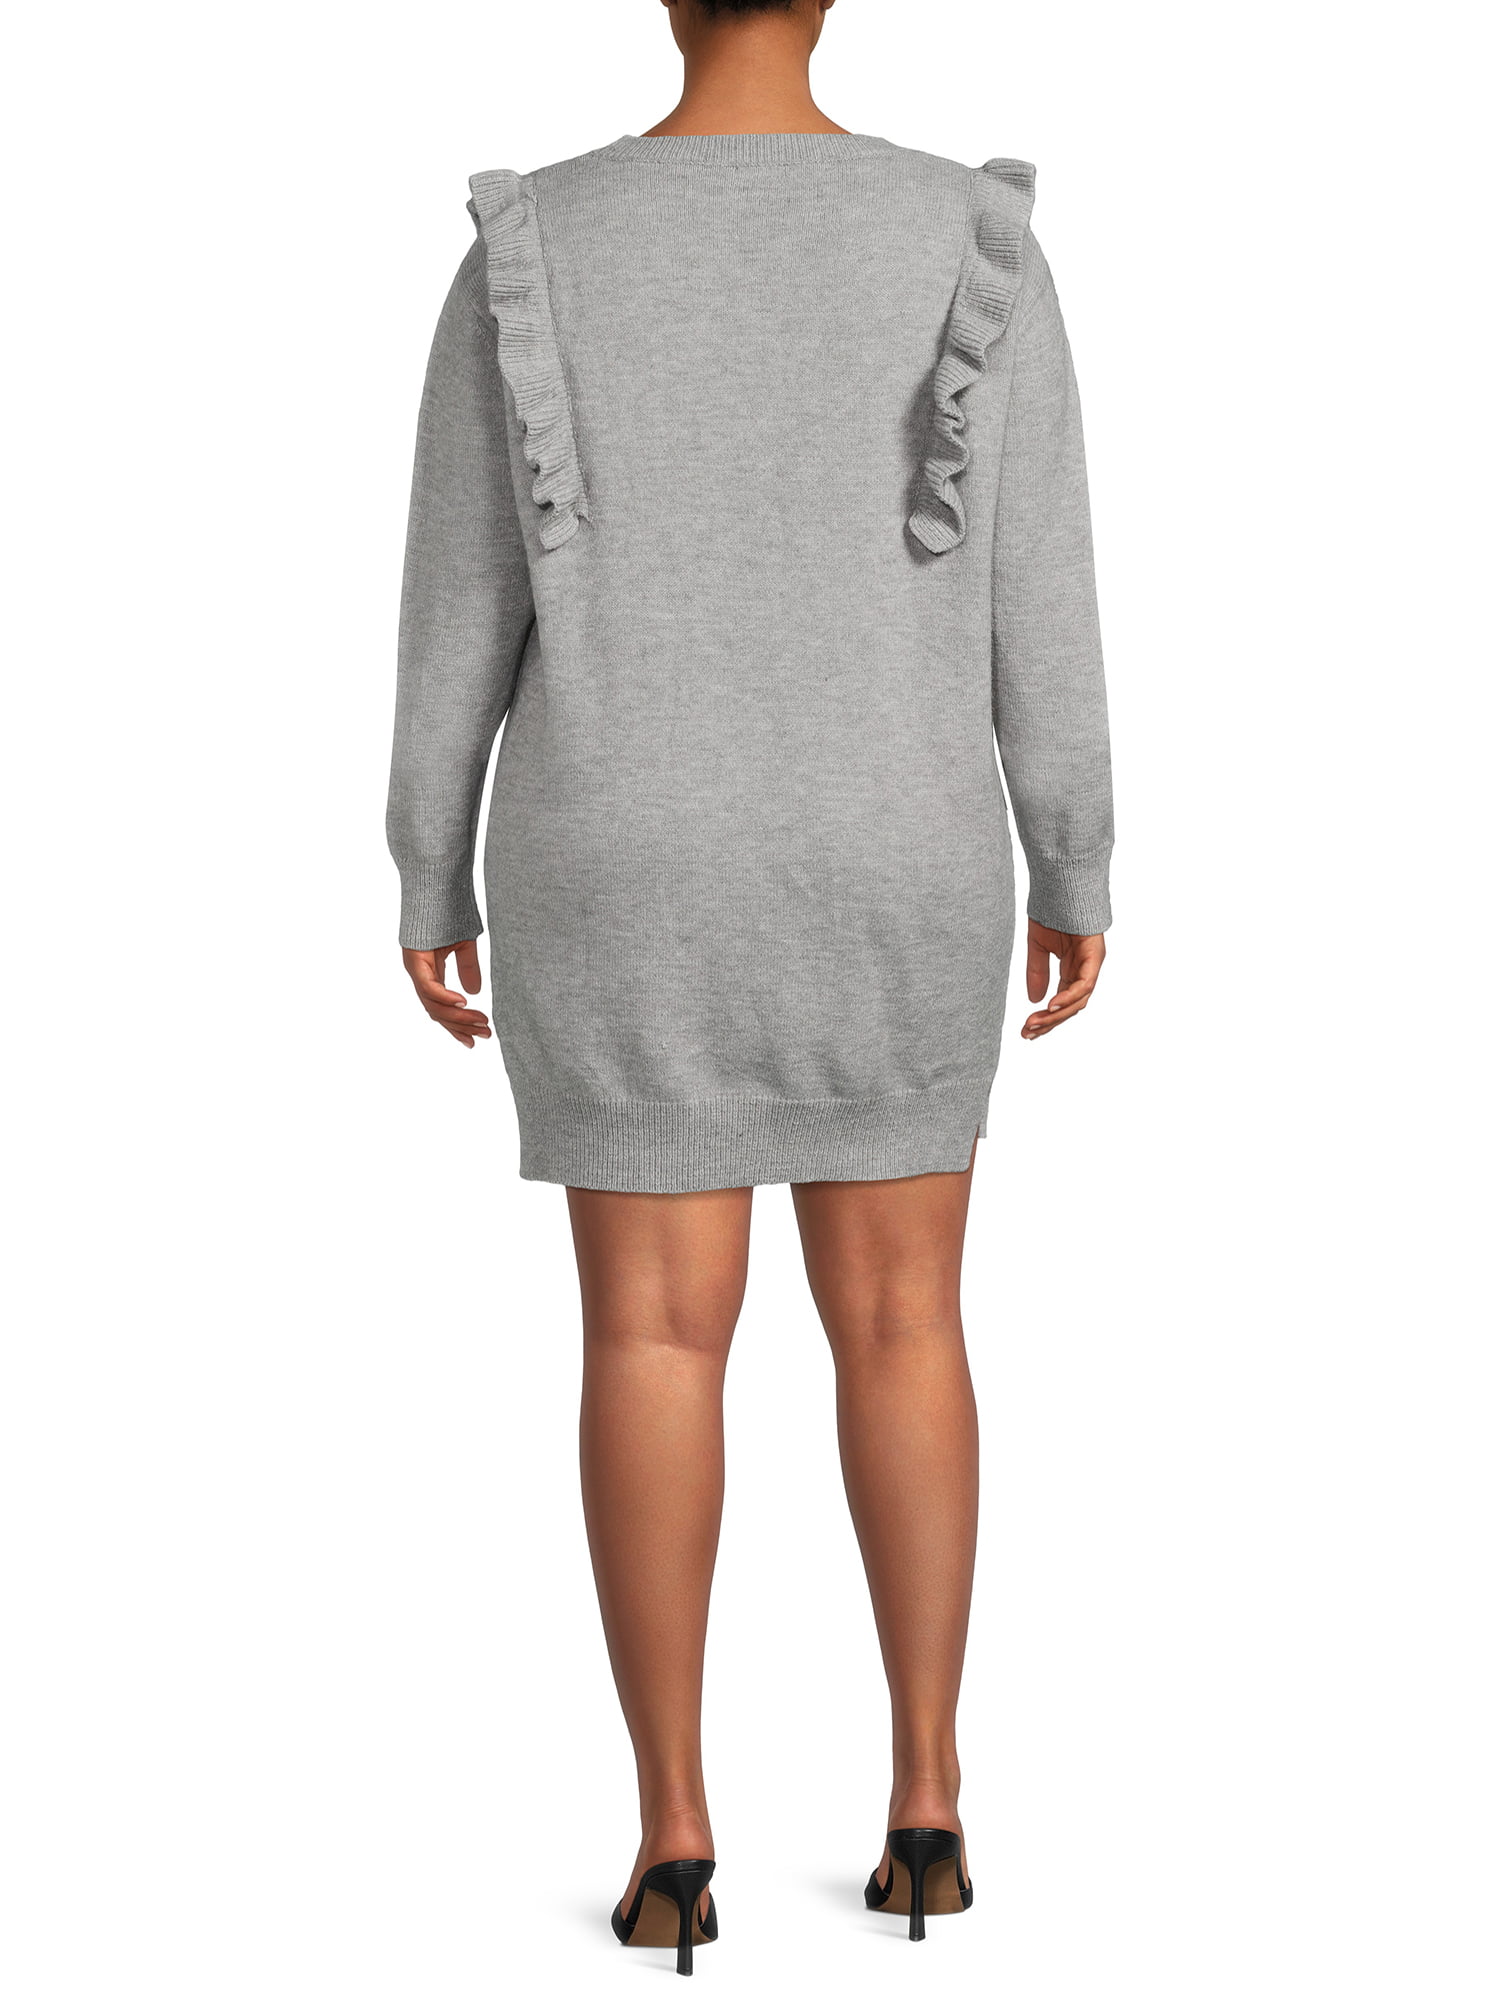 Cinched Ruffle Sleeve Sweatshirt Dress